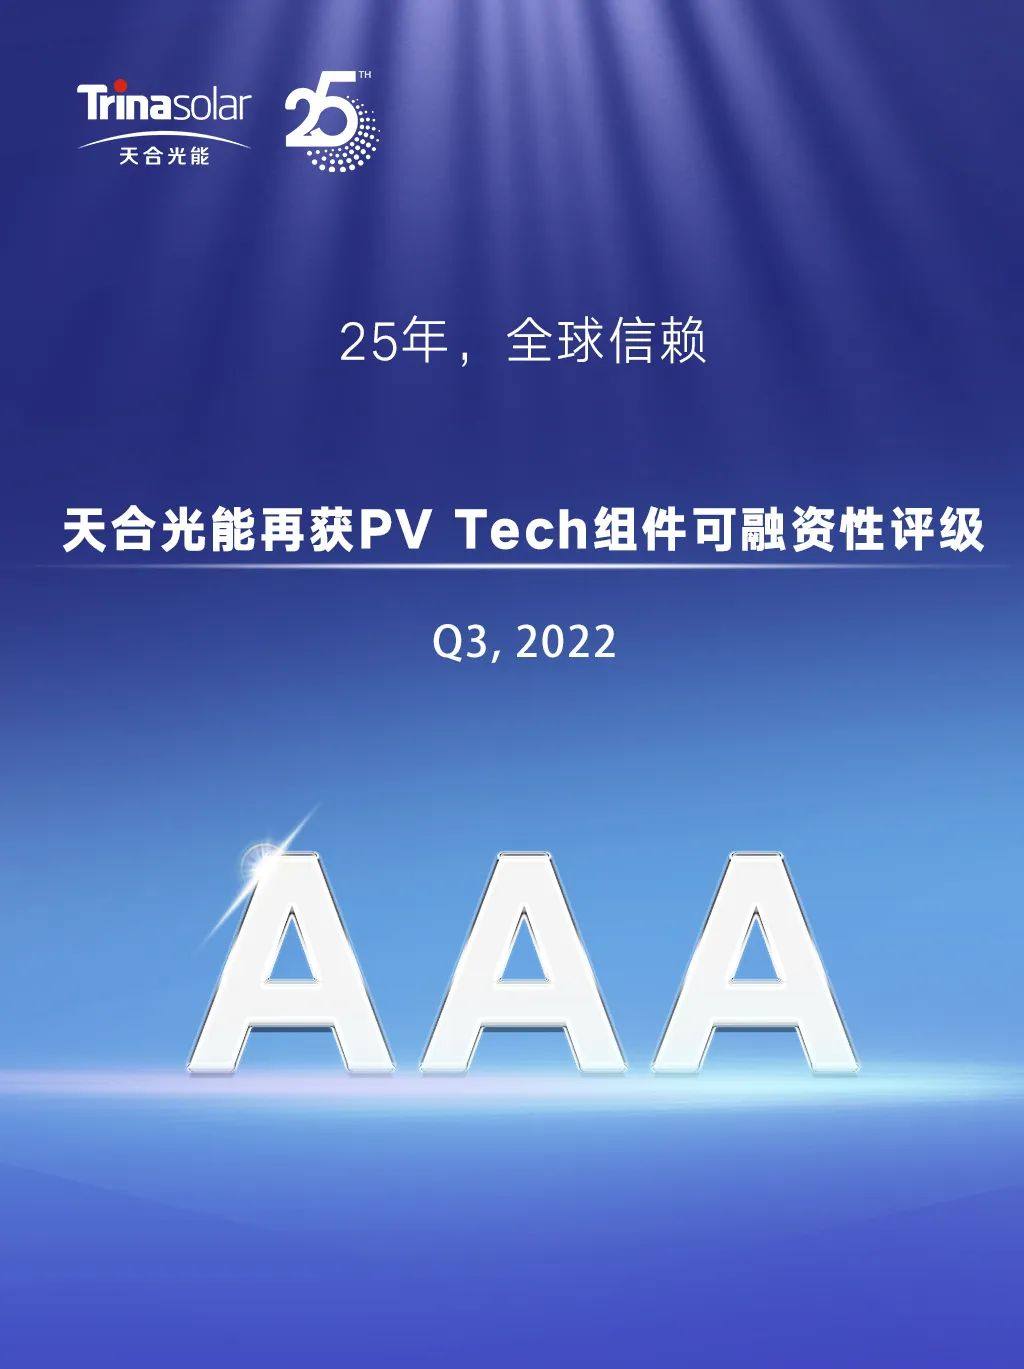 AAA！天合光能蝉联三季度PV Tech组件可融资性最高评级